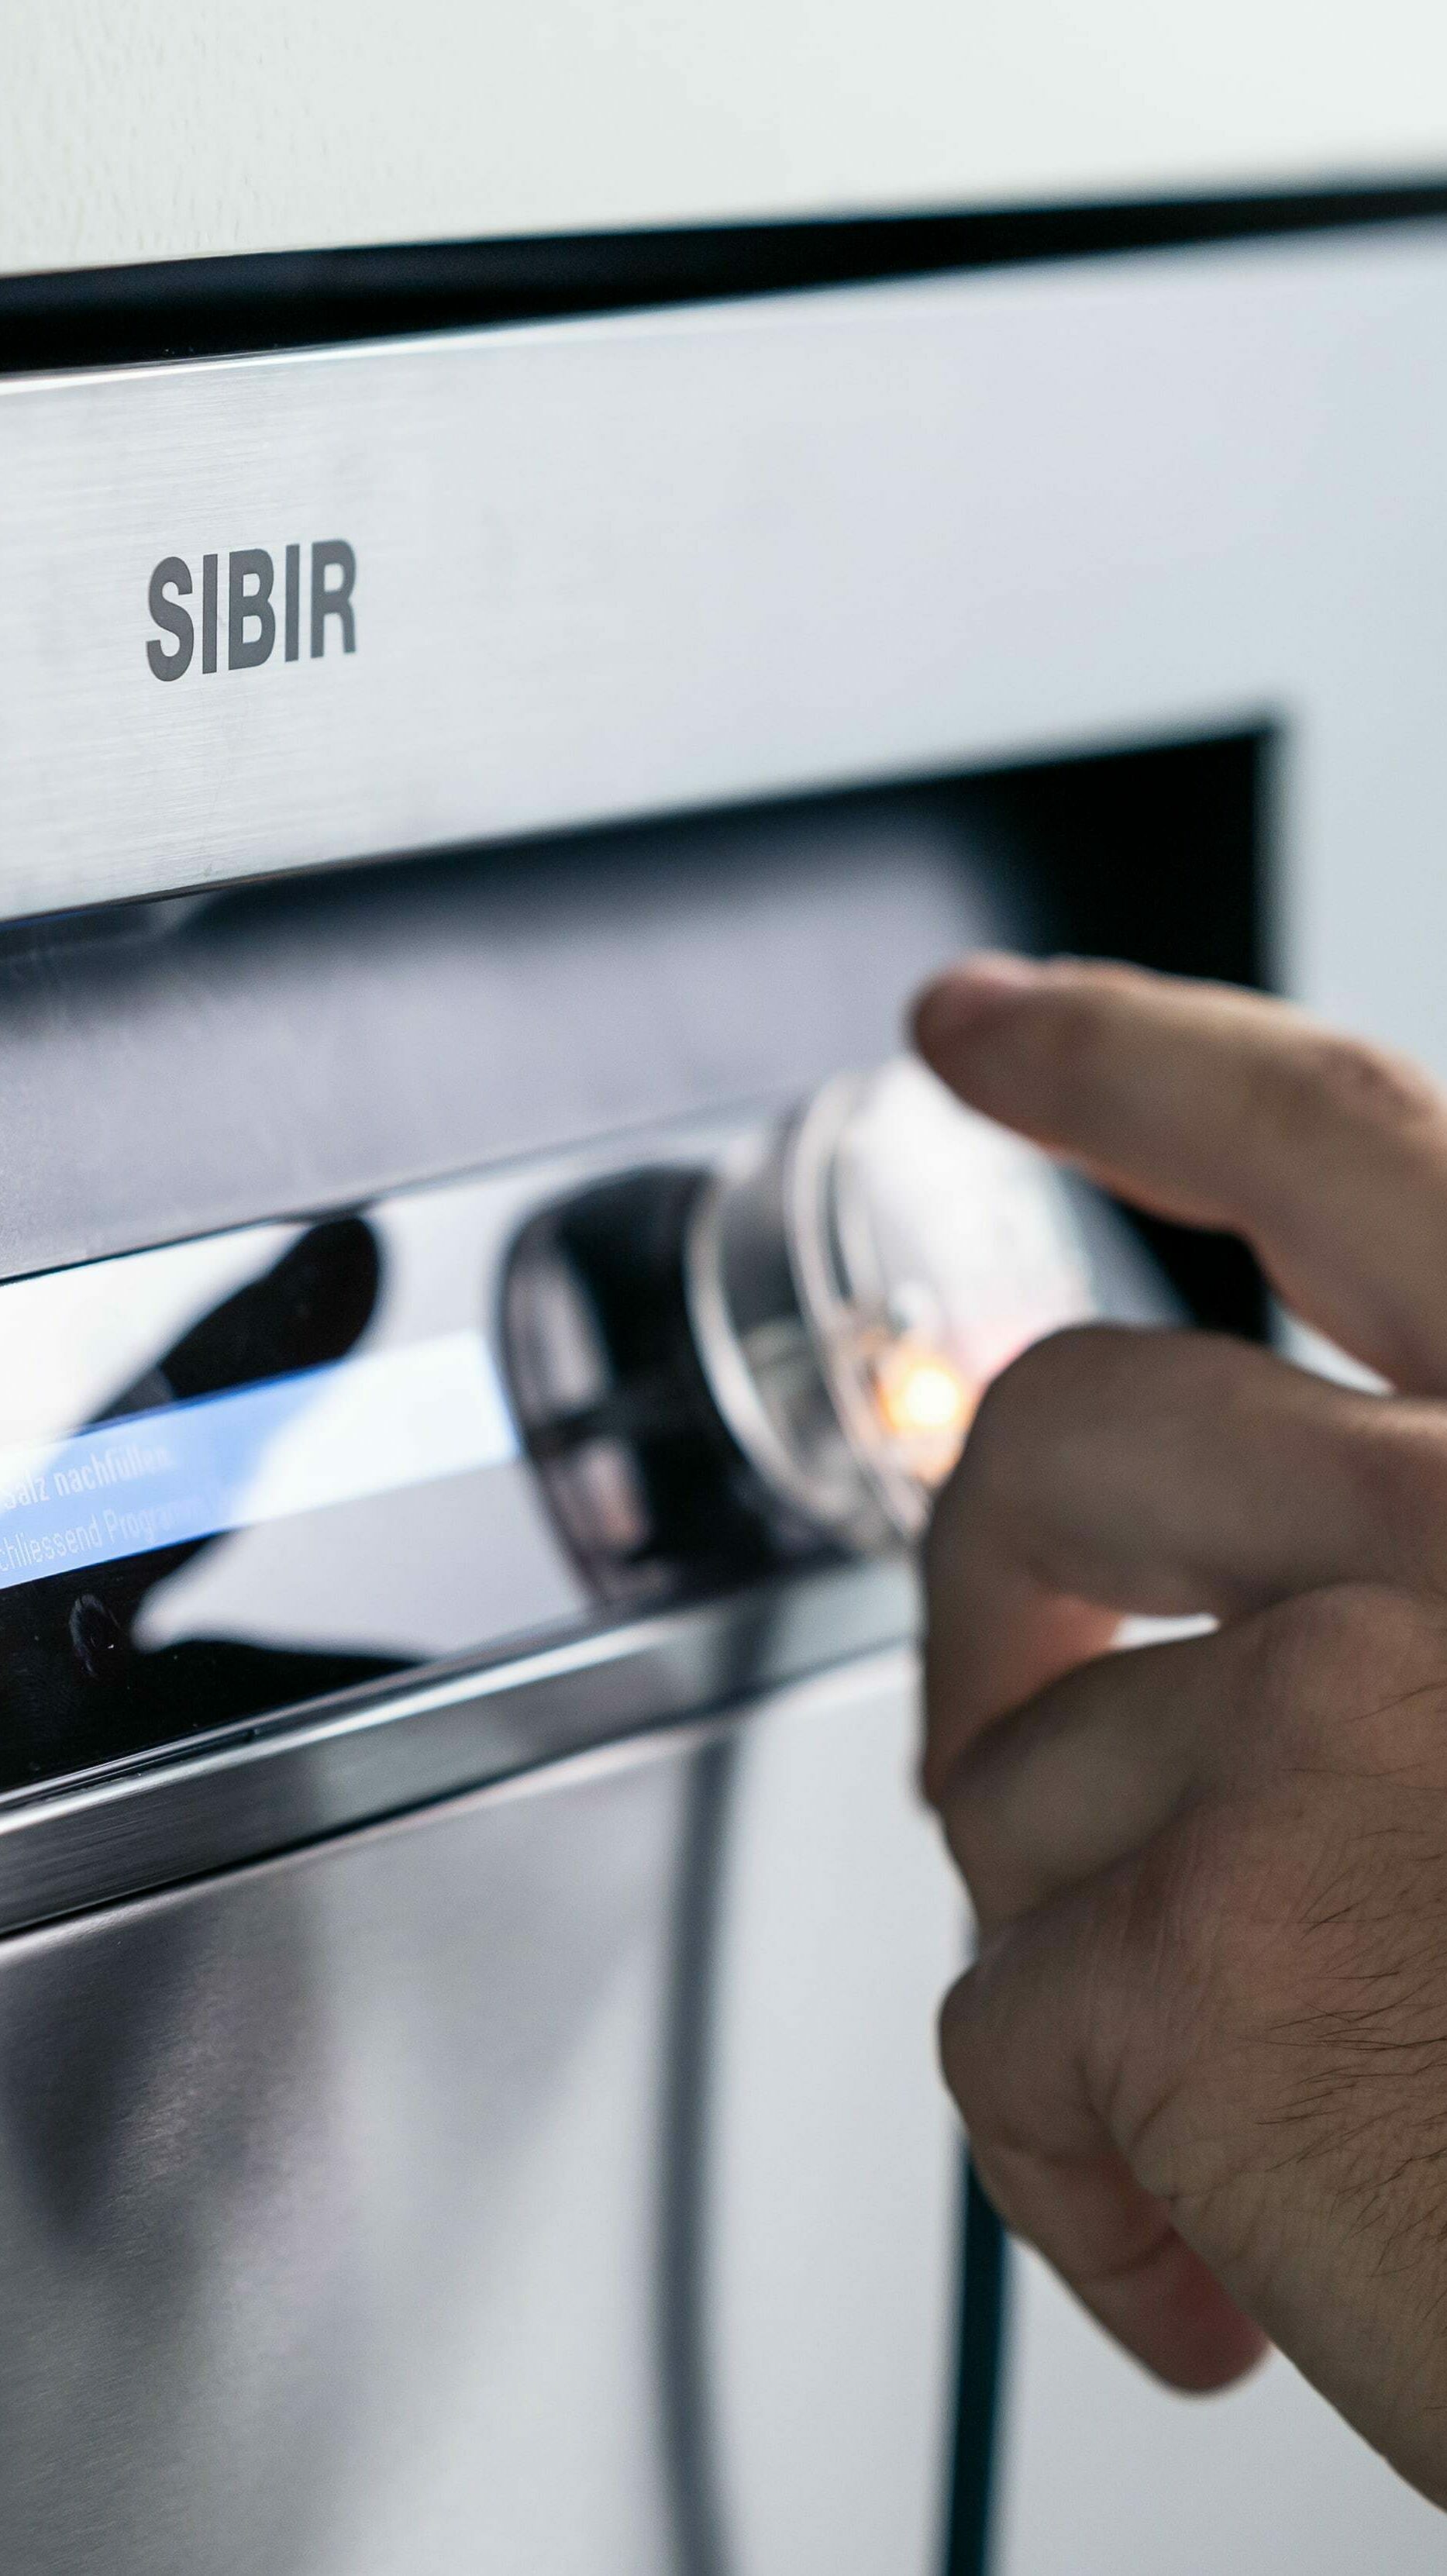 SIBIR appliance check